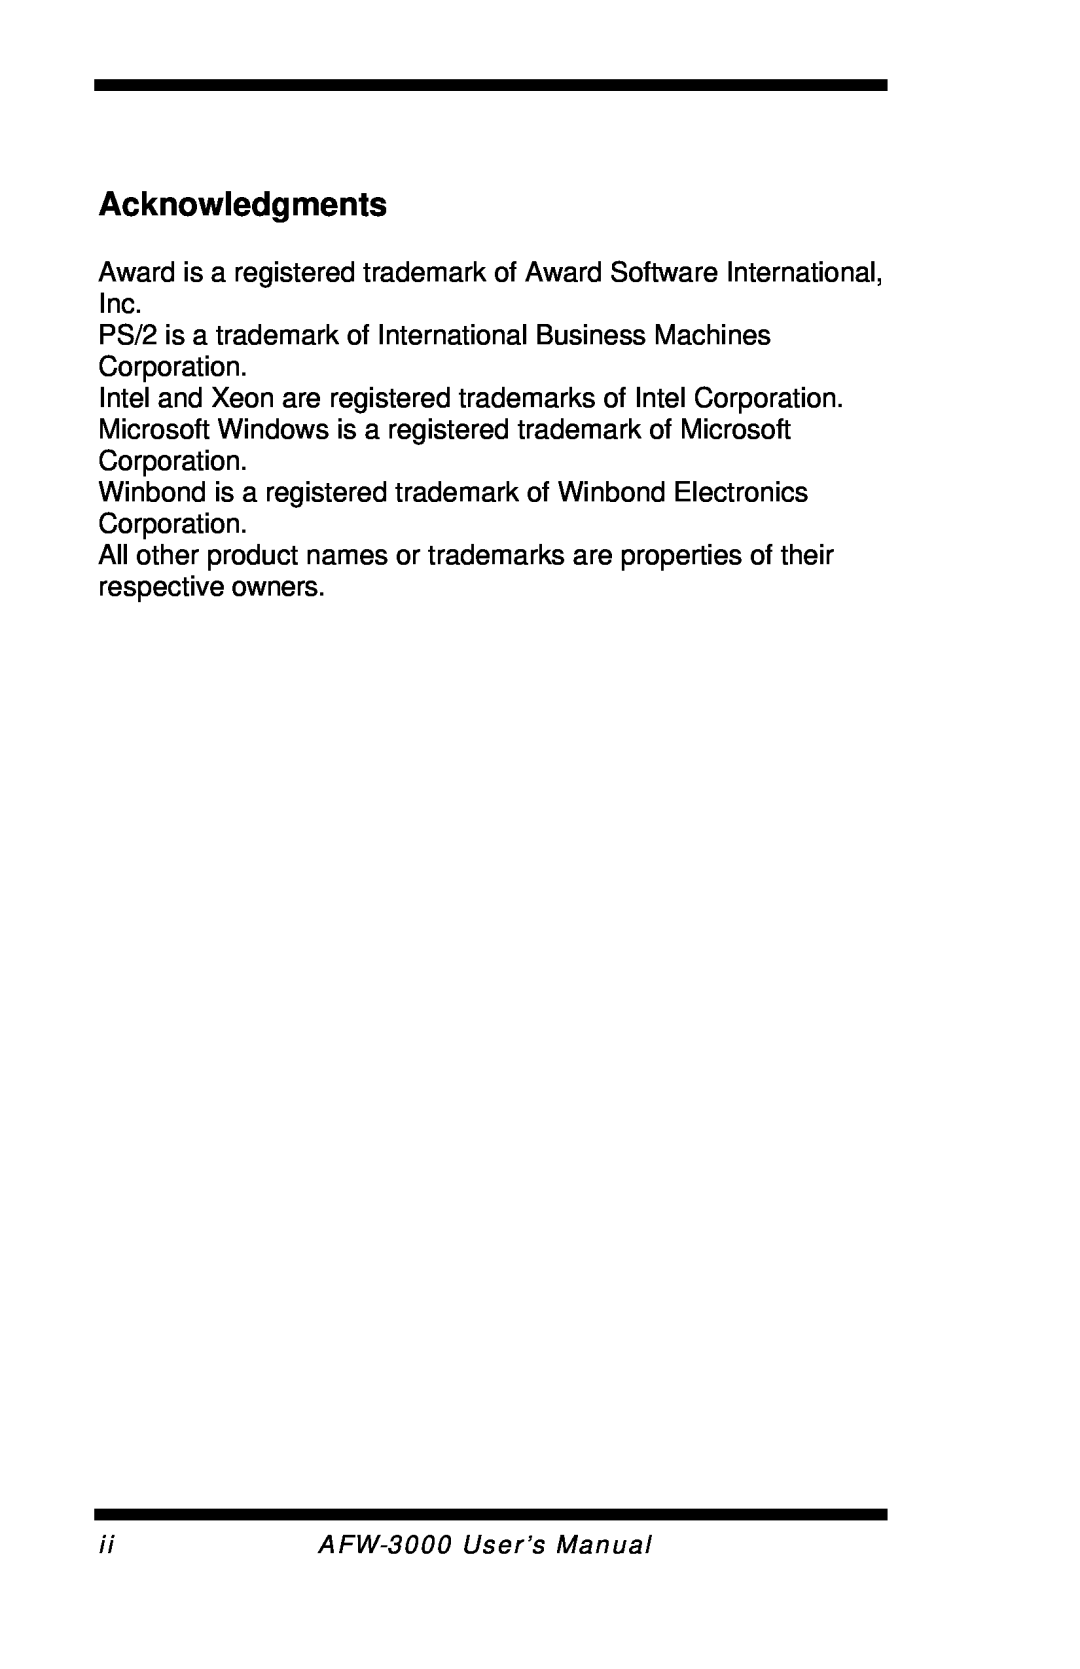 Intel E7501 user manual Acknowledgments, AFW-3000User’s Manual 